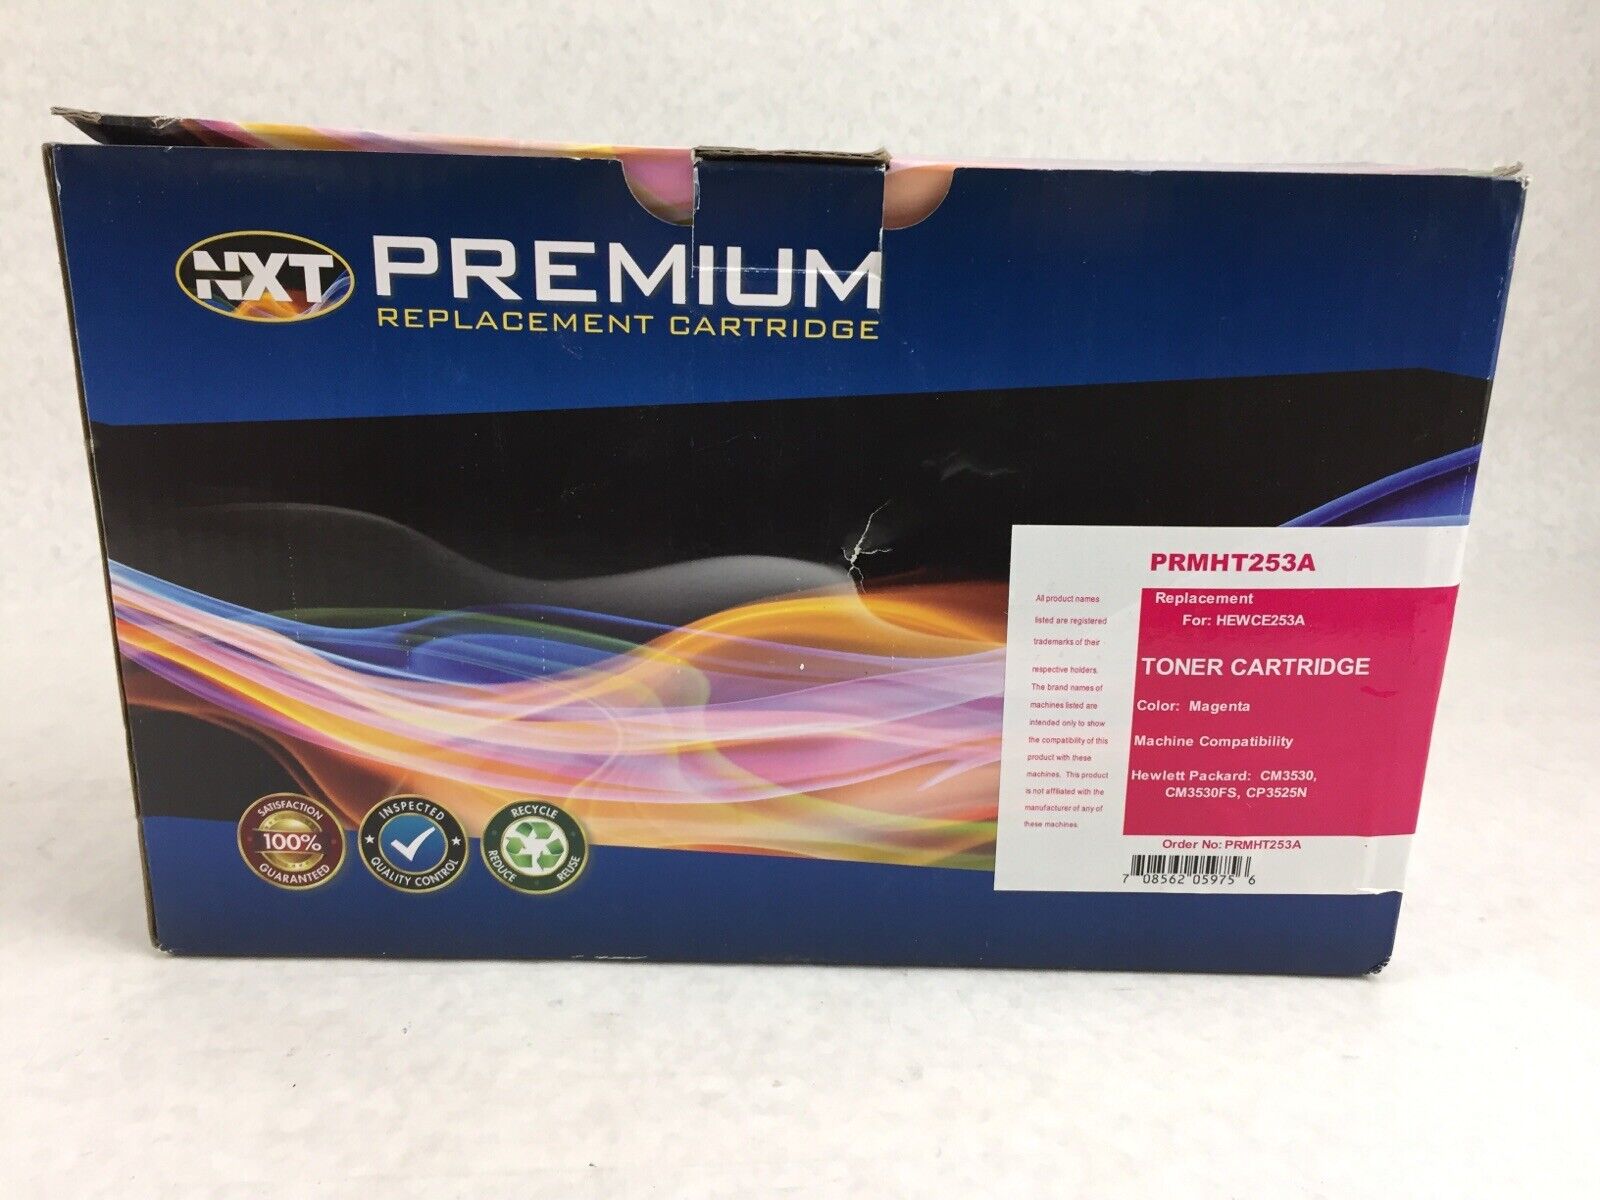 NXT Premium Replacement Cartridge PRMHT253A Magenta